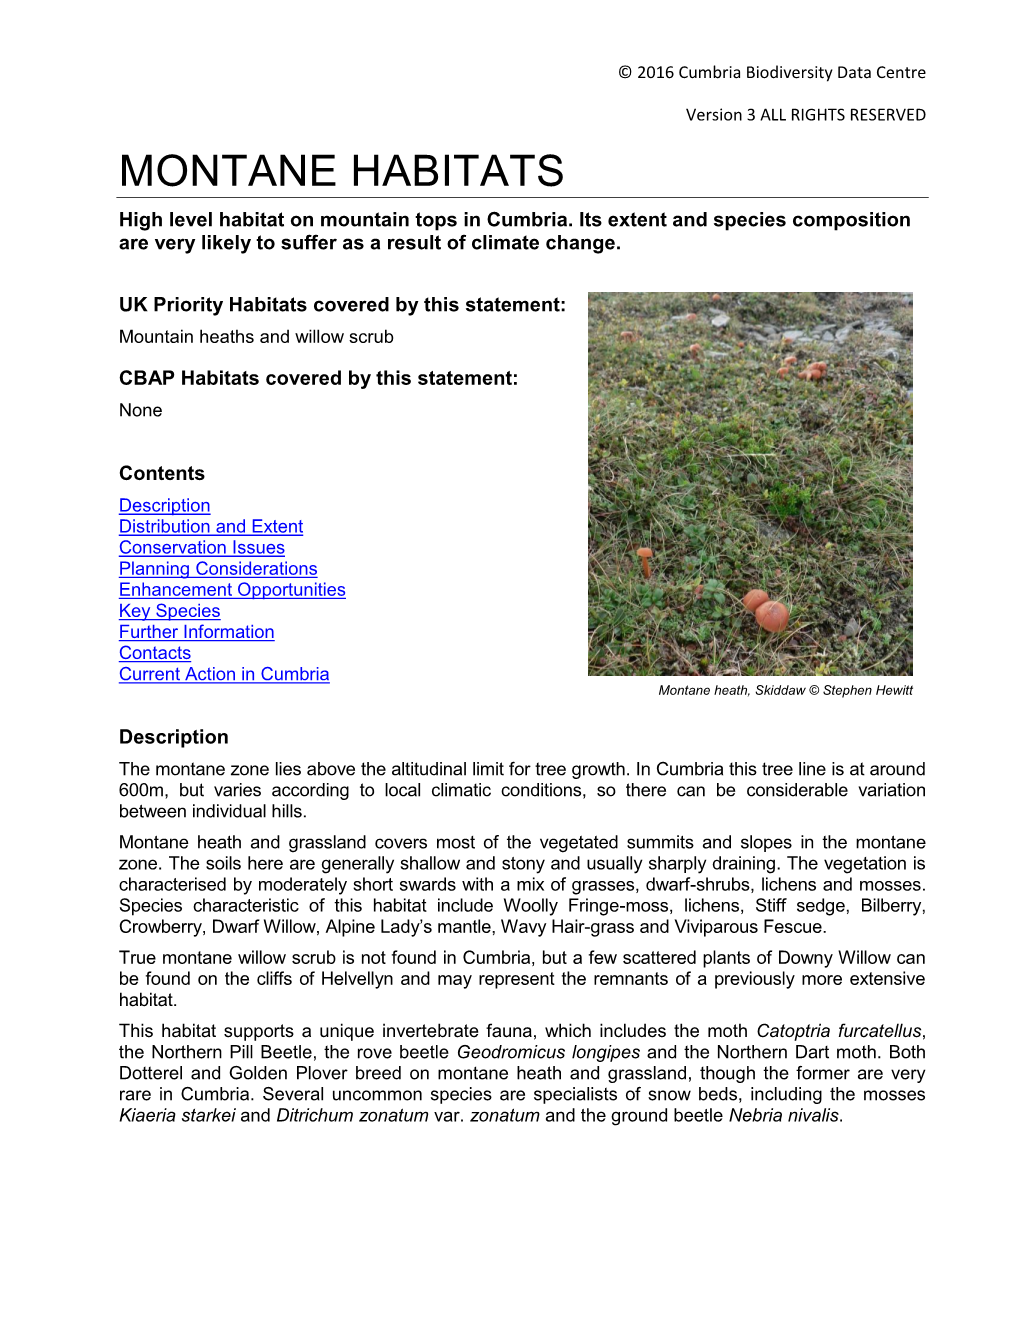 MONTANE HABITATS High Level Habitat on Mountain Tops in Cumbria